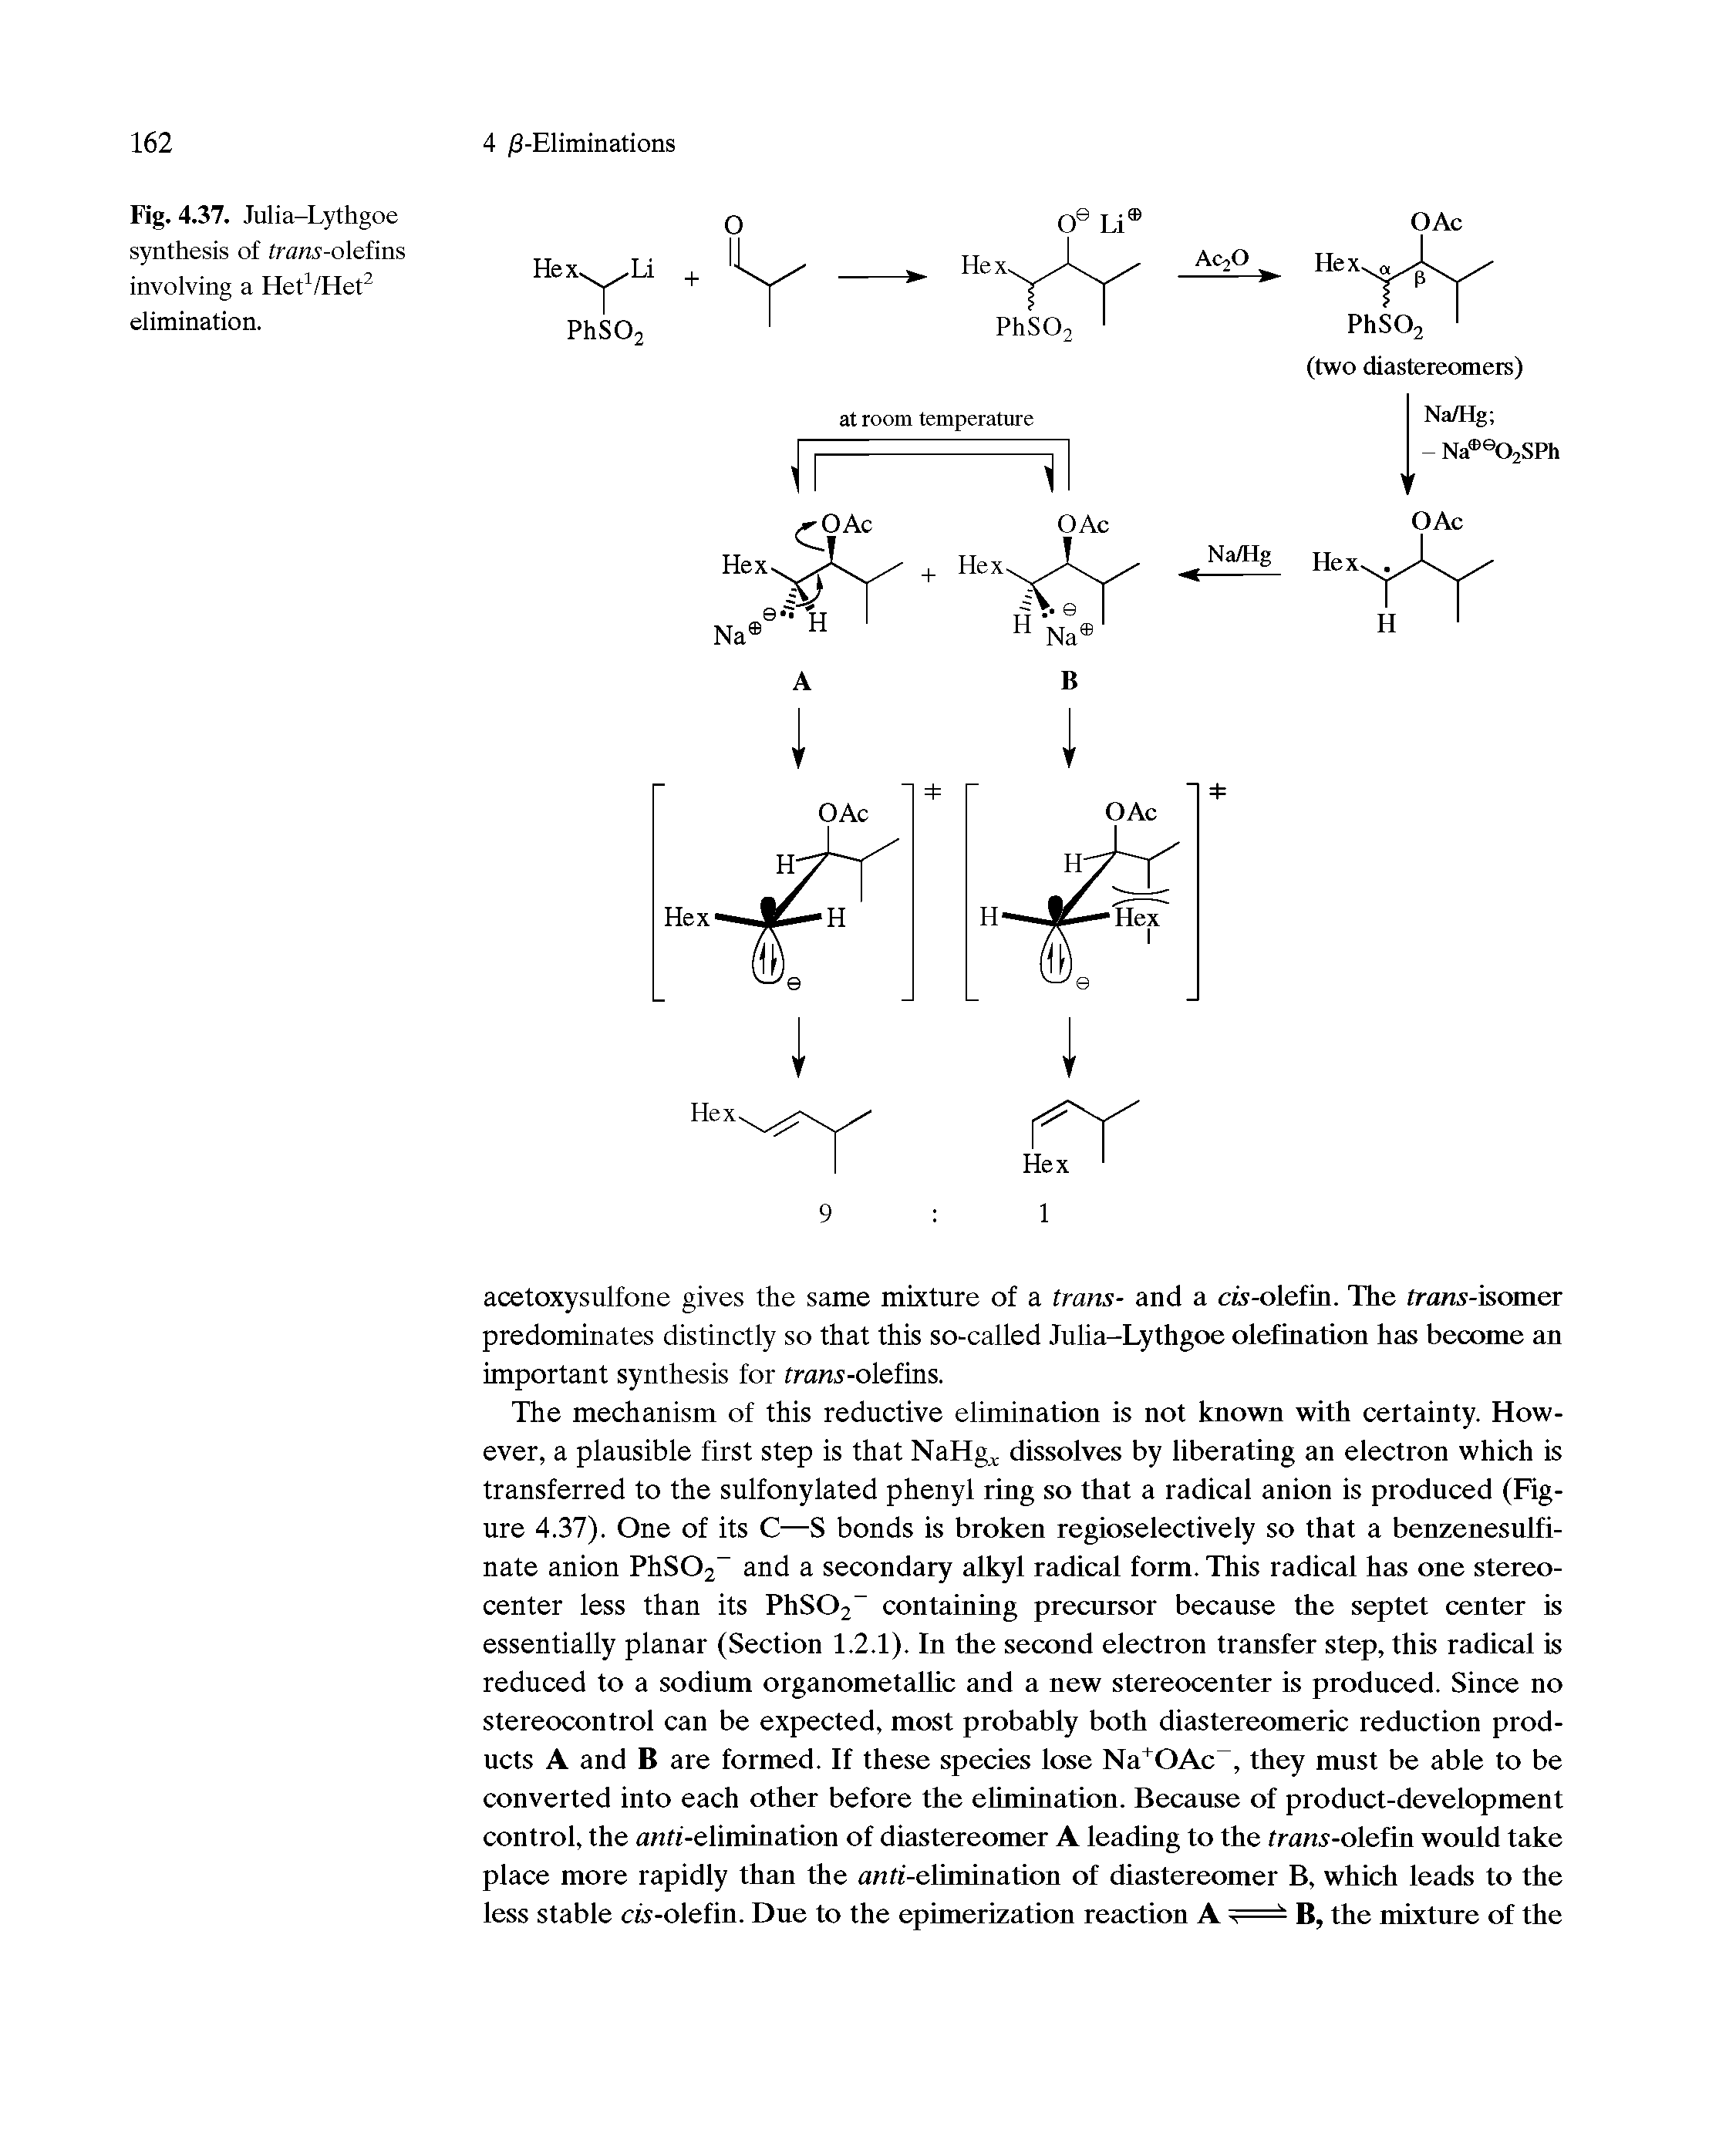 Fig. 4.37. Julia-Lythgoe synthesis of tram-olefins involving a HetVHet2 elimination.